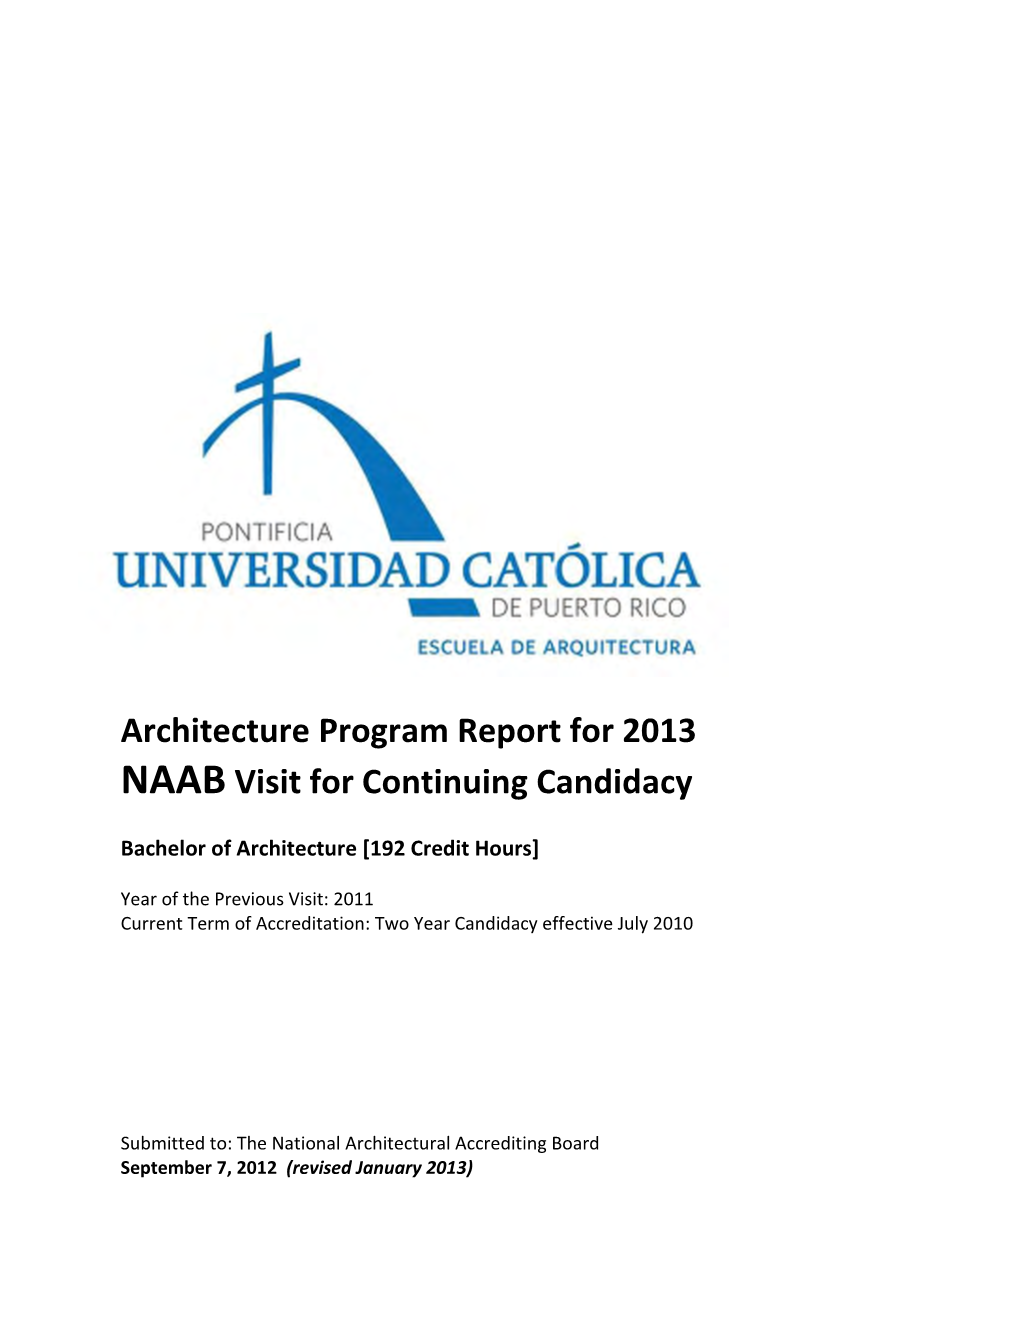 NAAB 2013 Architecture Program Report